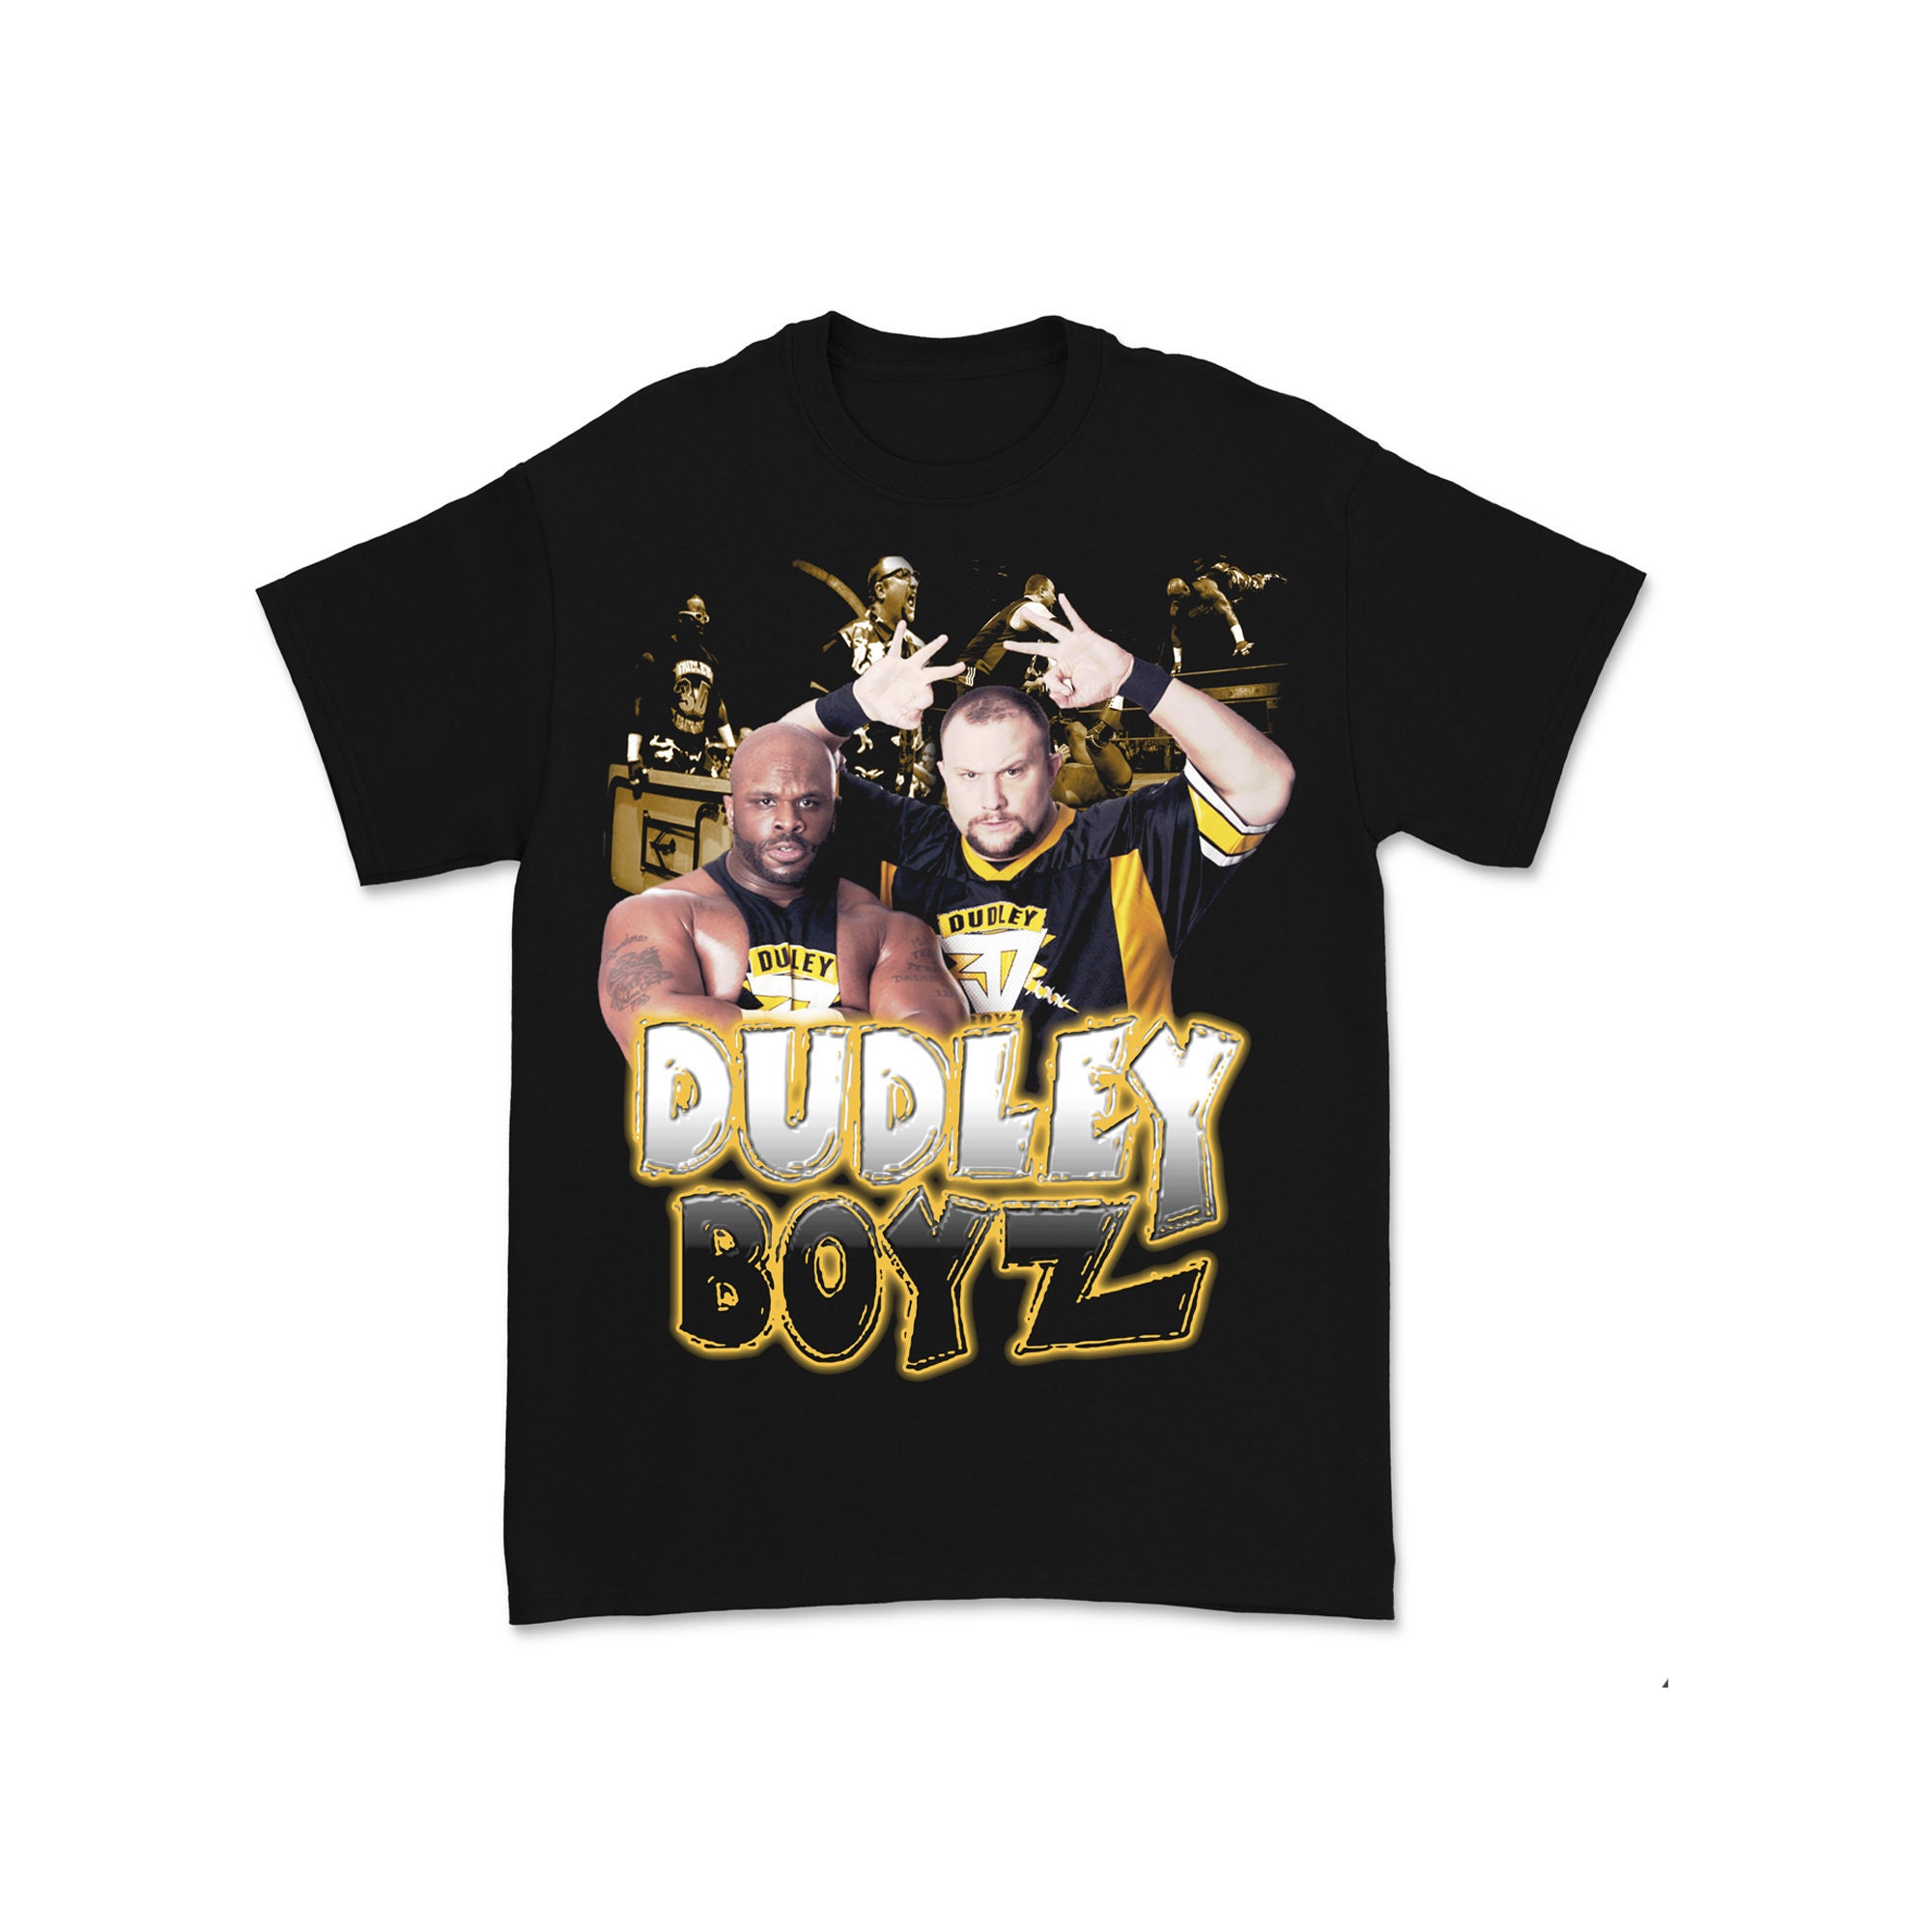 VTG-2000 Lita Hardy Boyz Team Xtreme Beauty WWF WWE new t shirt Gildan